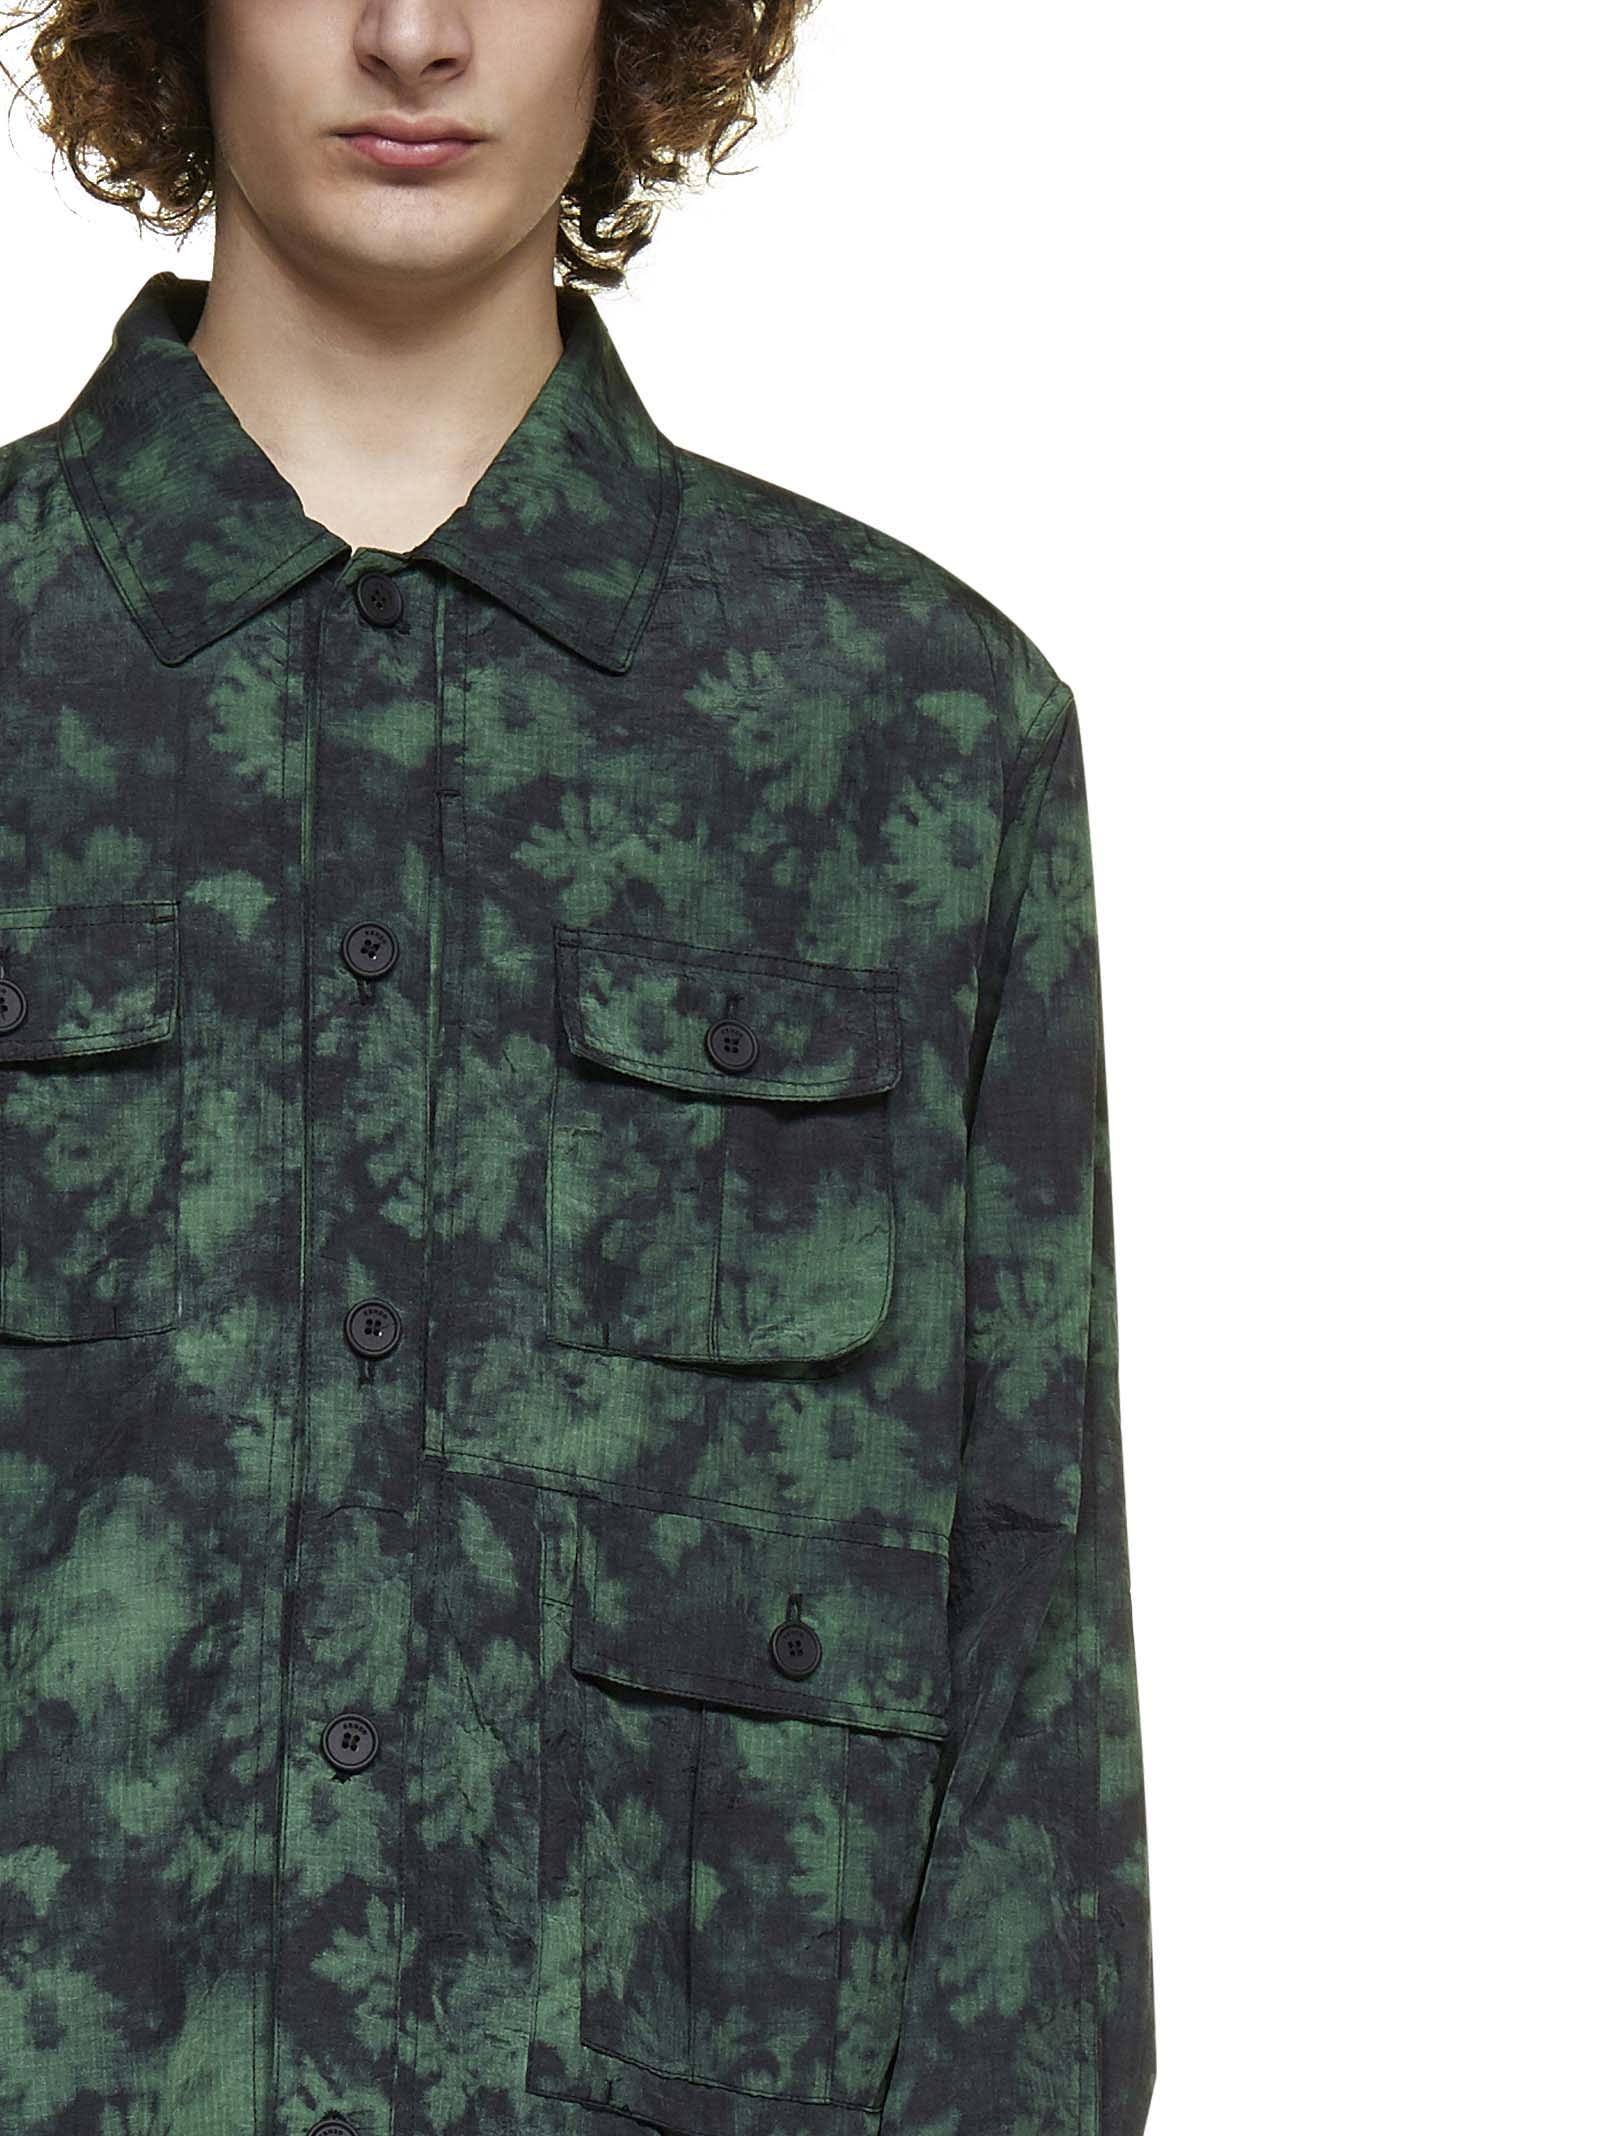 KENZO Print Cotton Utilitarian Overshirt in Green for Men | Lyst